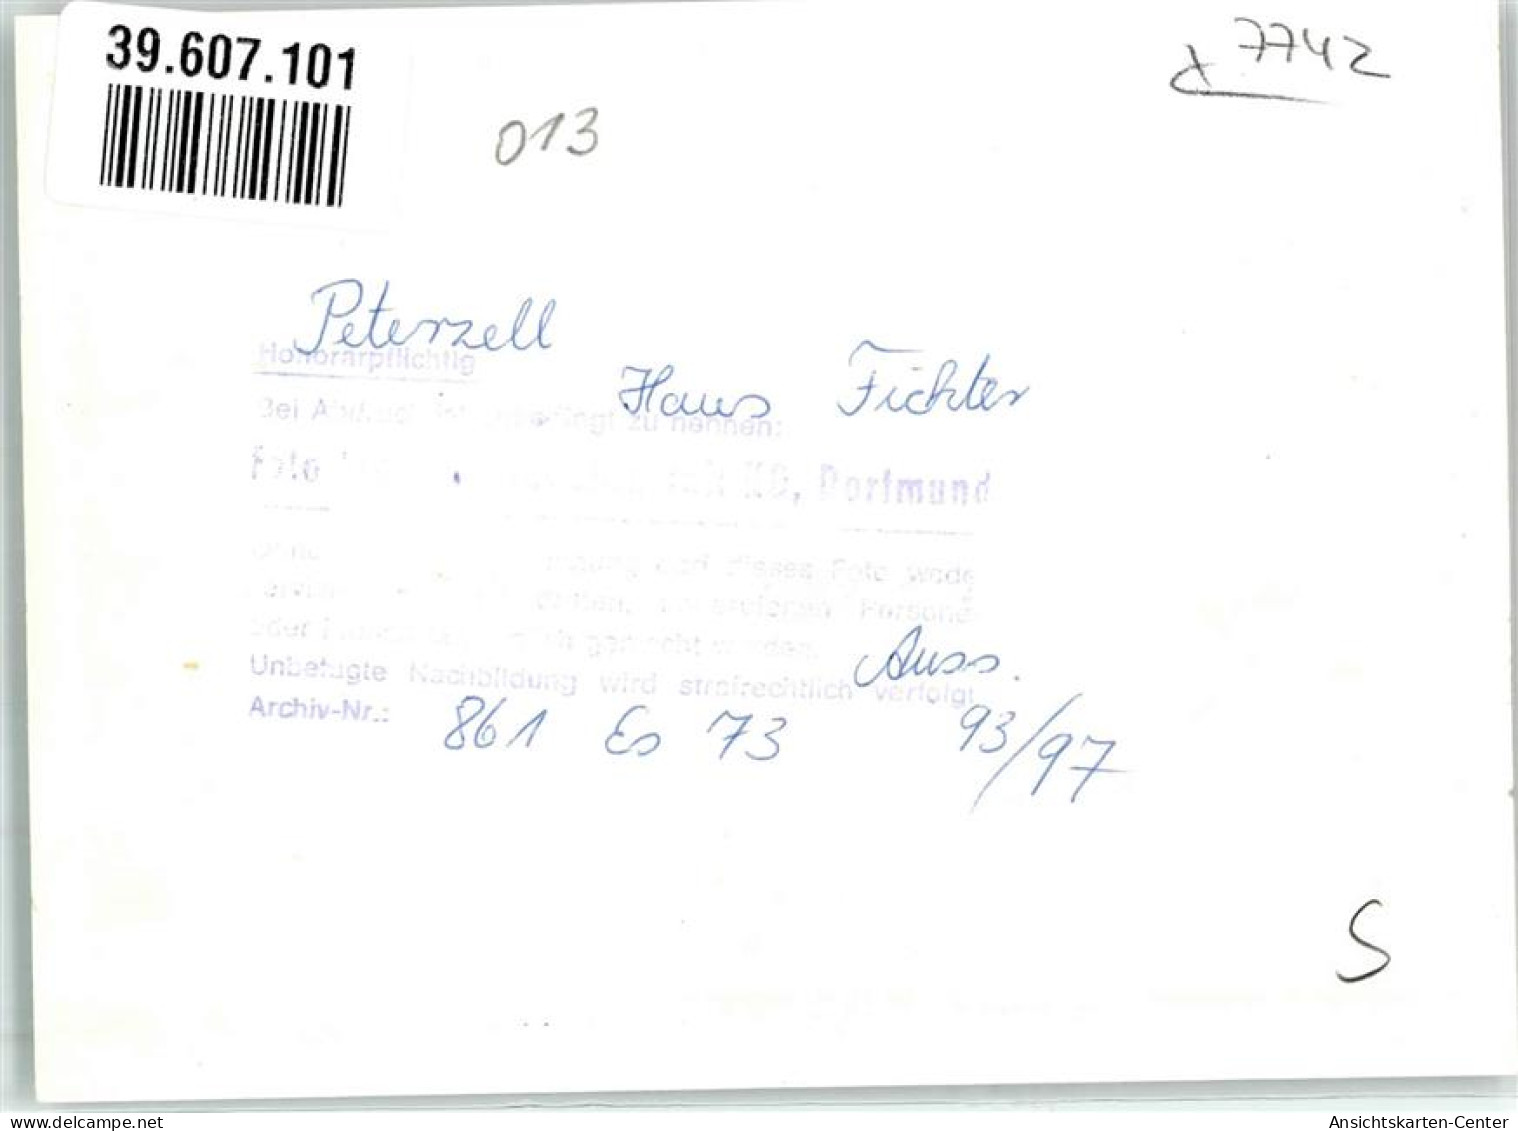 39607101 - Peterzell , Schwarzw - Villingen - Schwenningen